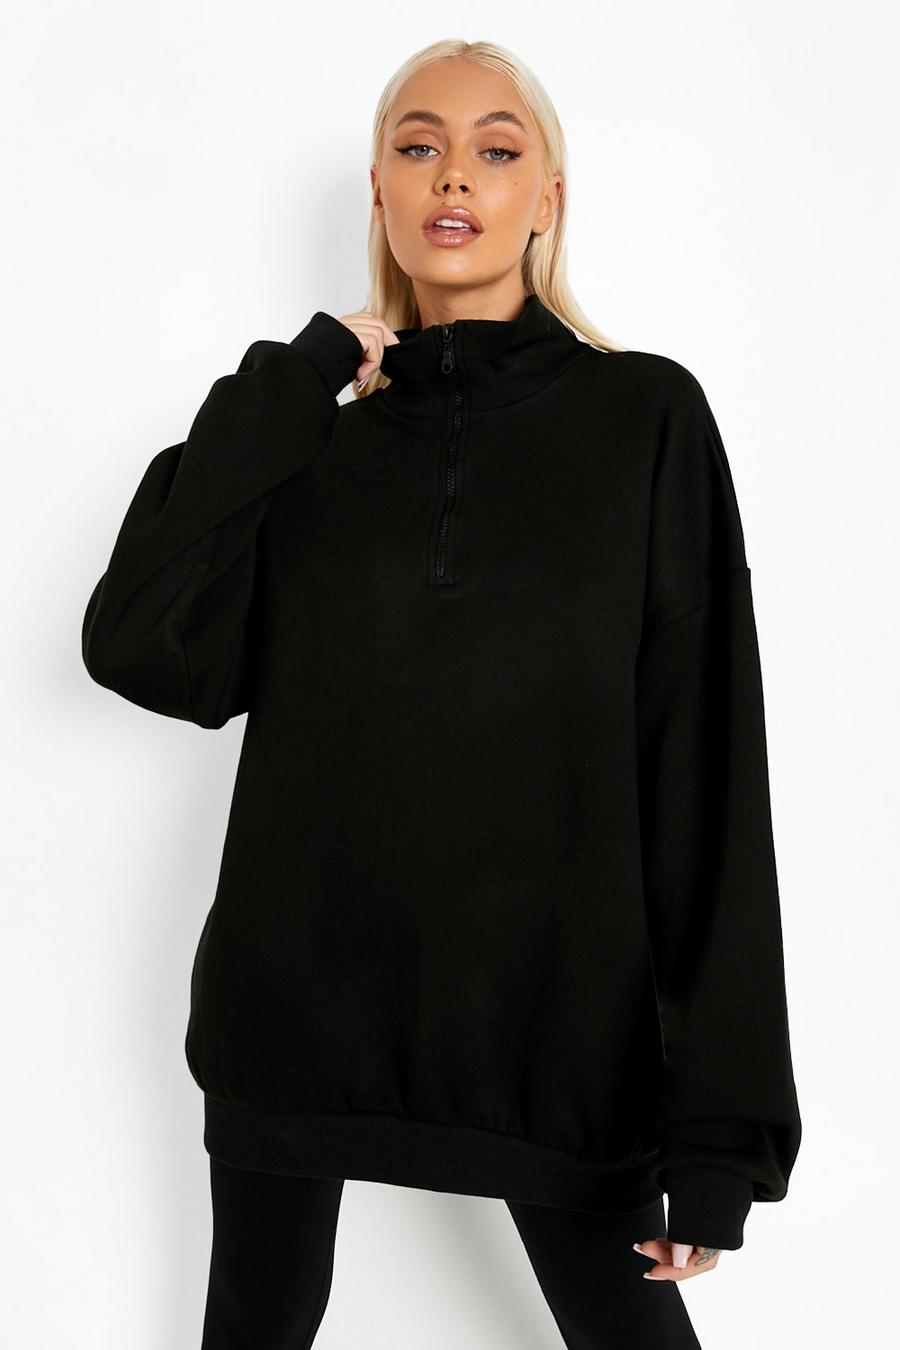 https://media.boohoo.com/i/boohoo/fzz38003_black_xl/female-black-oversized-half-zip-sweatshirt/?w=900&qlt=default&fmt.jp2.qlt=70&fmt=auto&sm=fit